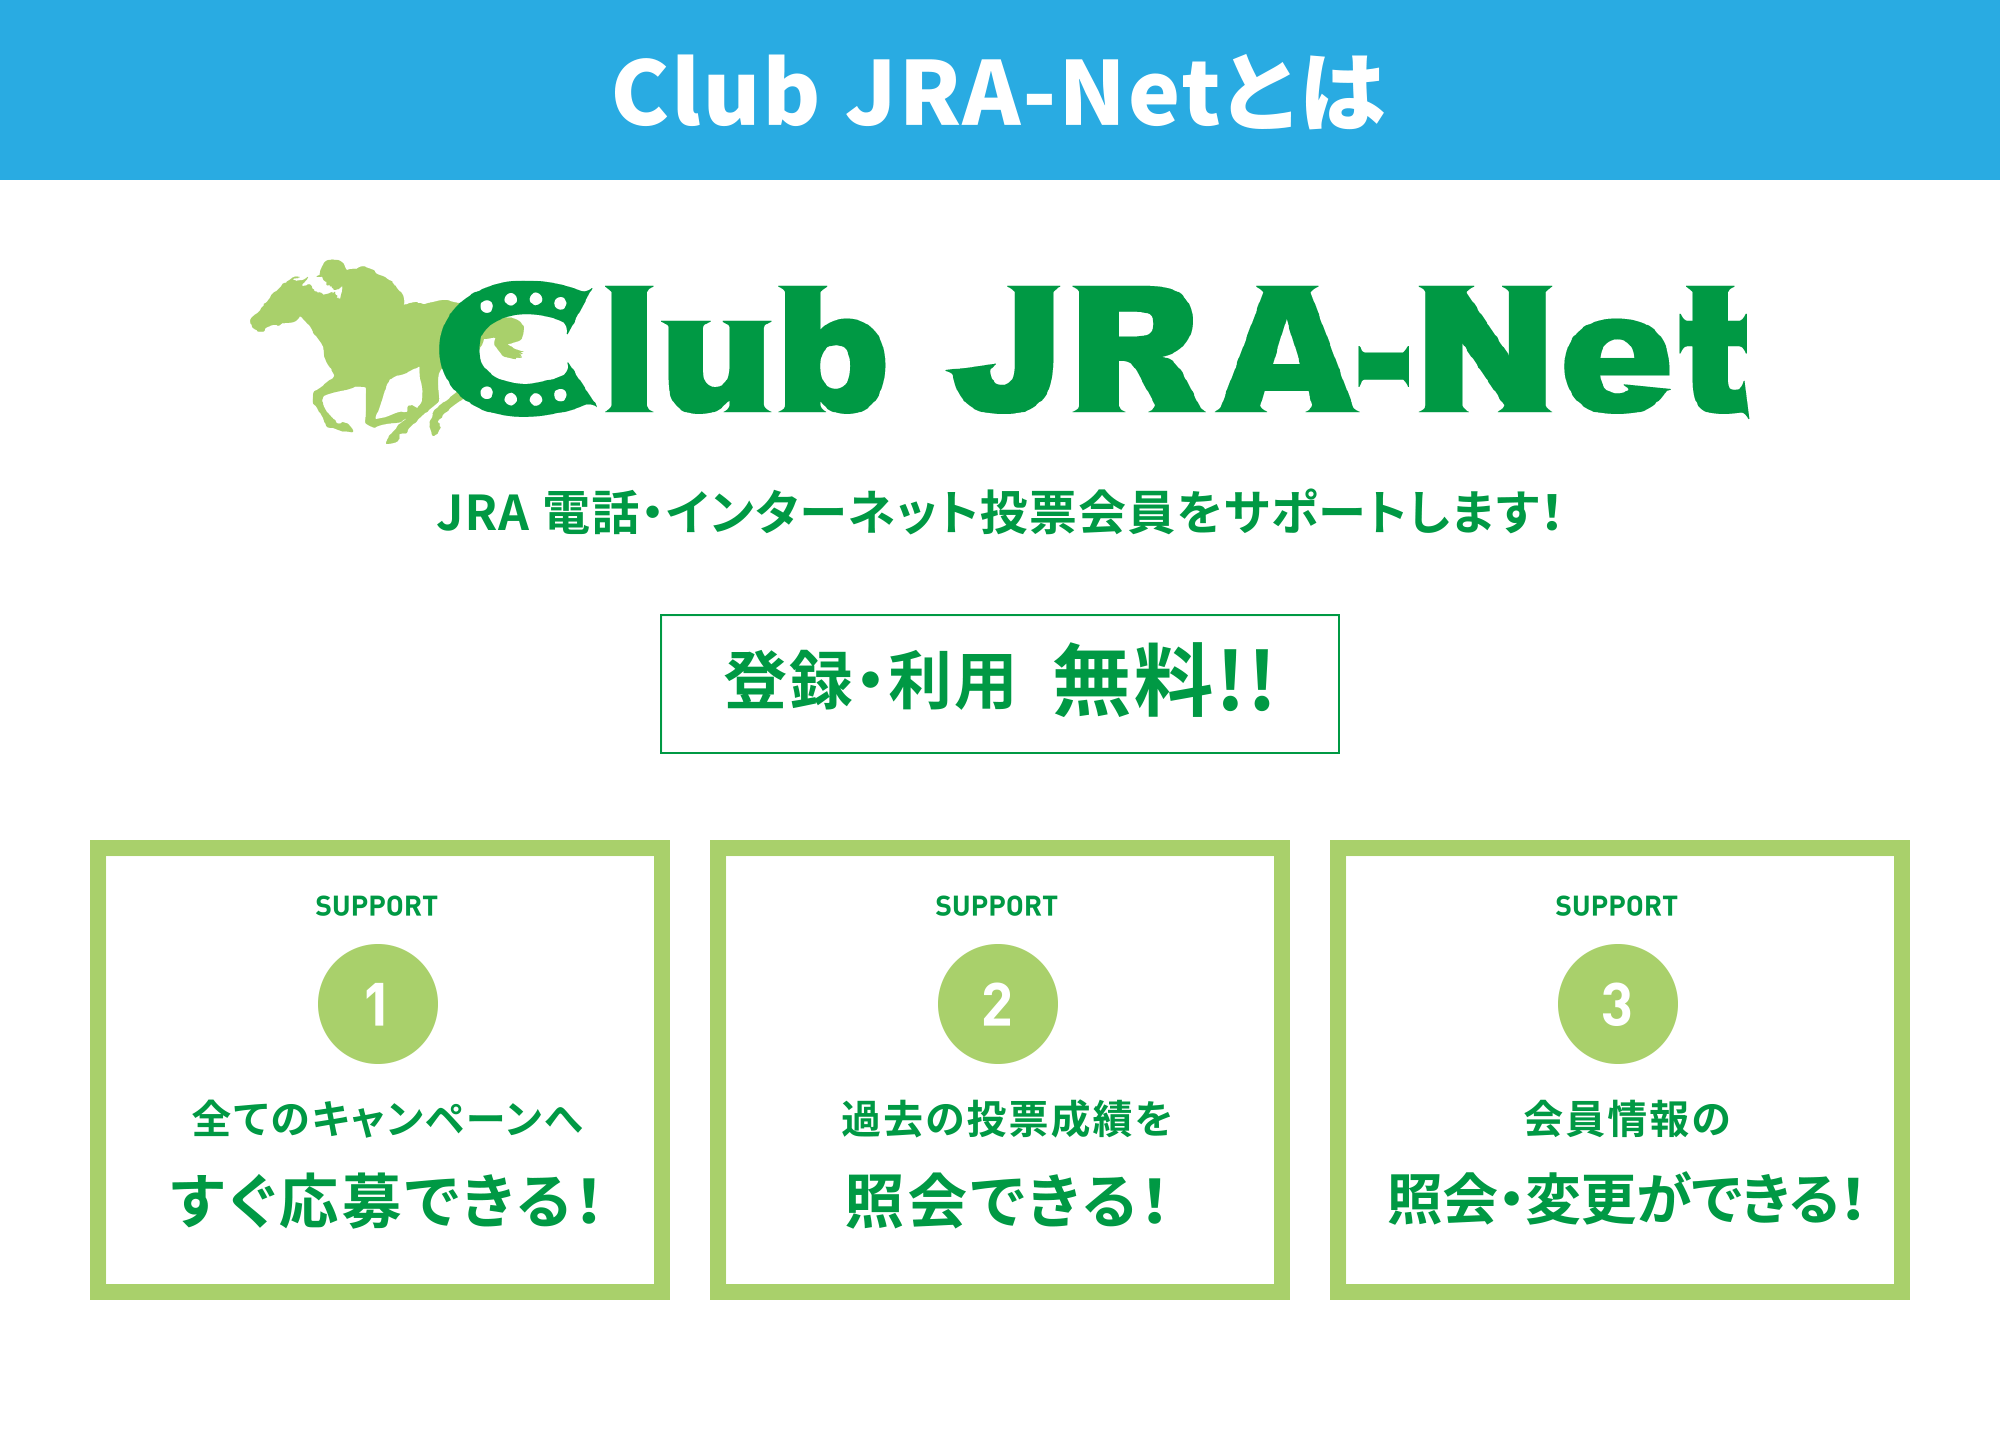 Club JRA-NetƂ
JRA dbEC^[lbg[T|[g܂Io^Ep  !!
SUPPORT1  SẴLy[ւłI
SUPPORT2  ߋ̓[тƉłI
SUPPORT3  ̏ƉEύXłI